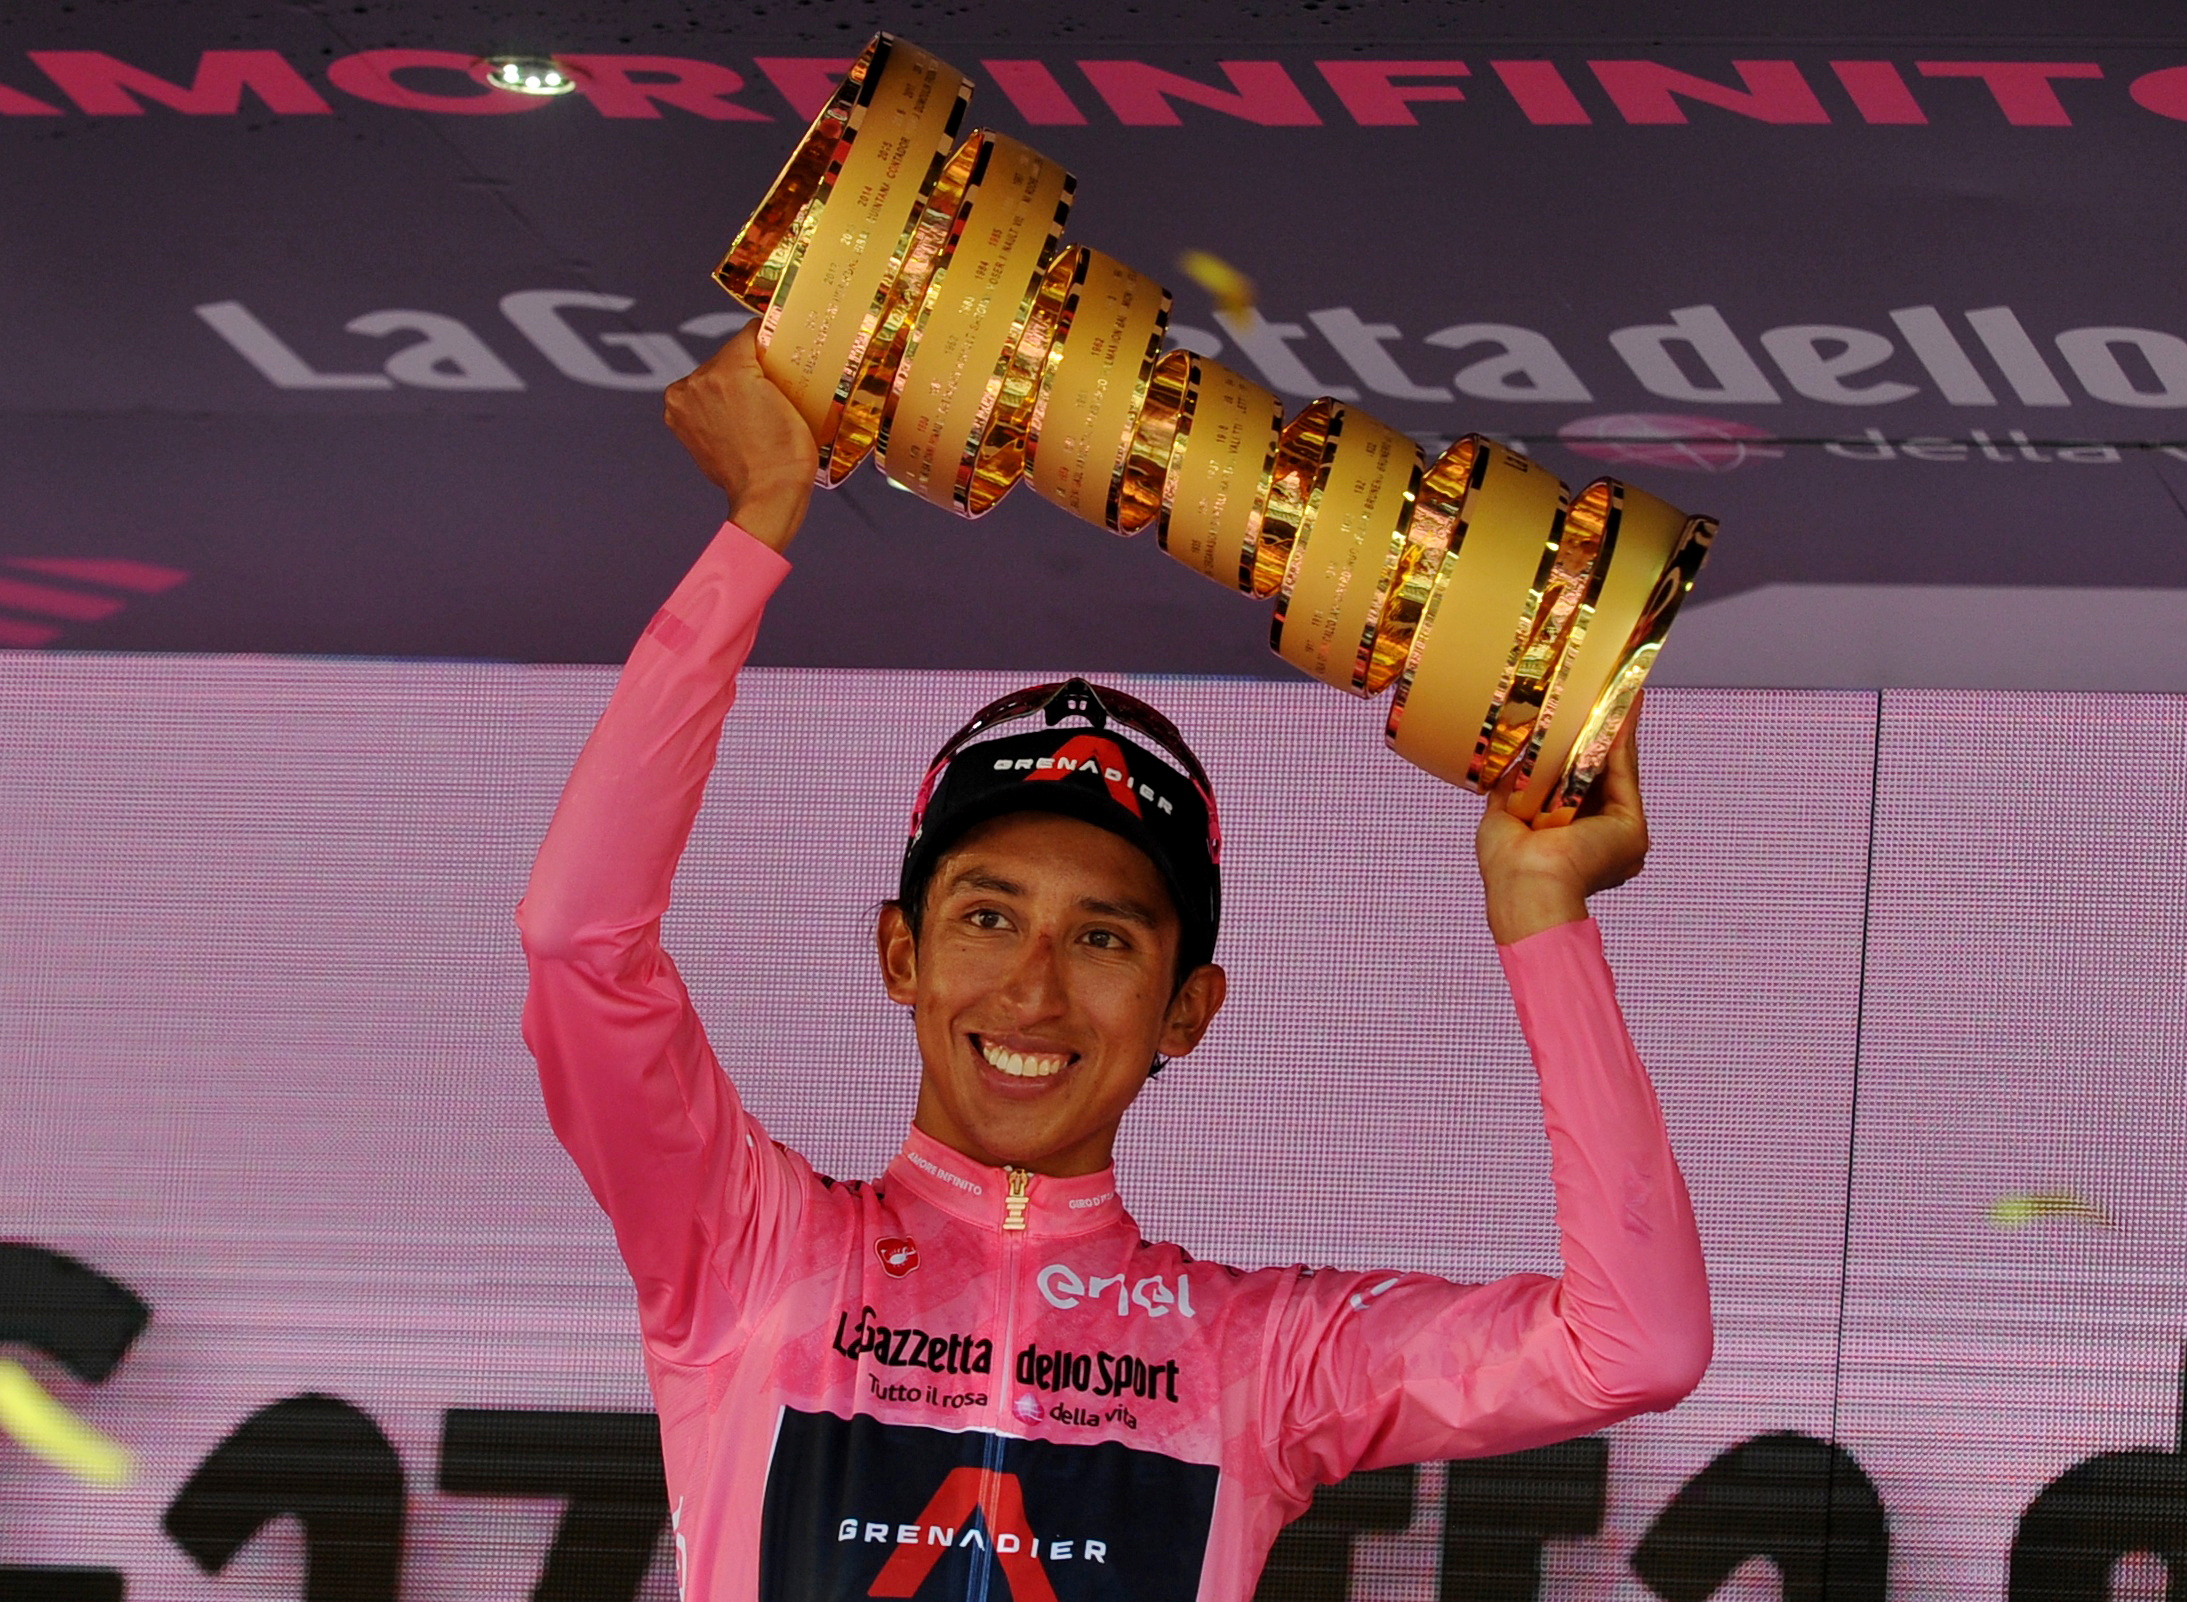 OBALFILE PHOTO: Giro d'Italia